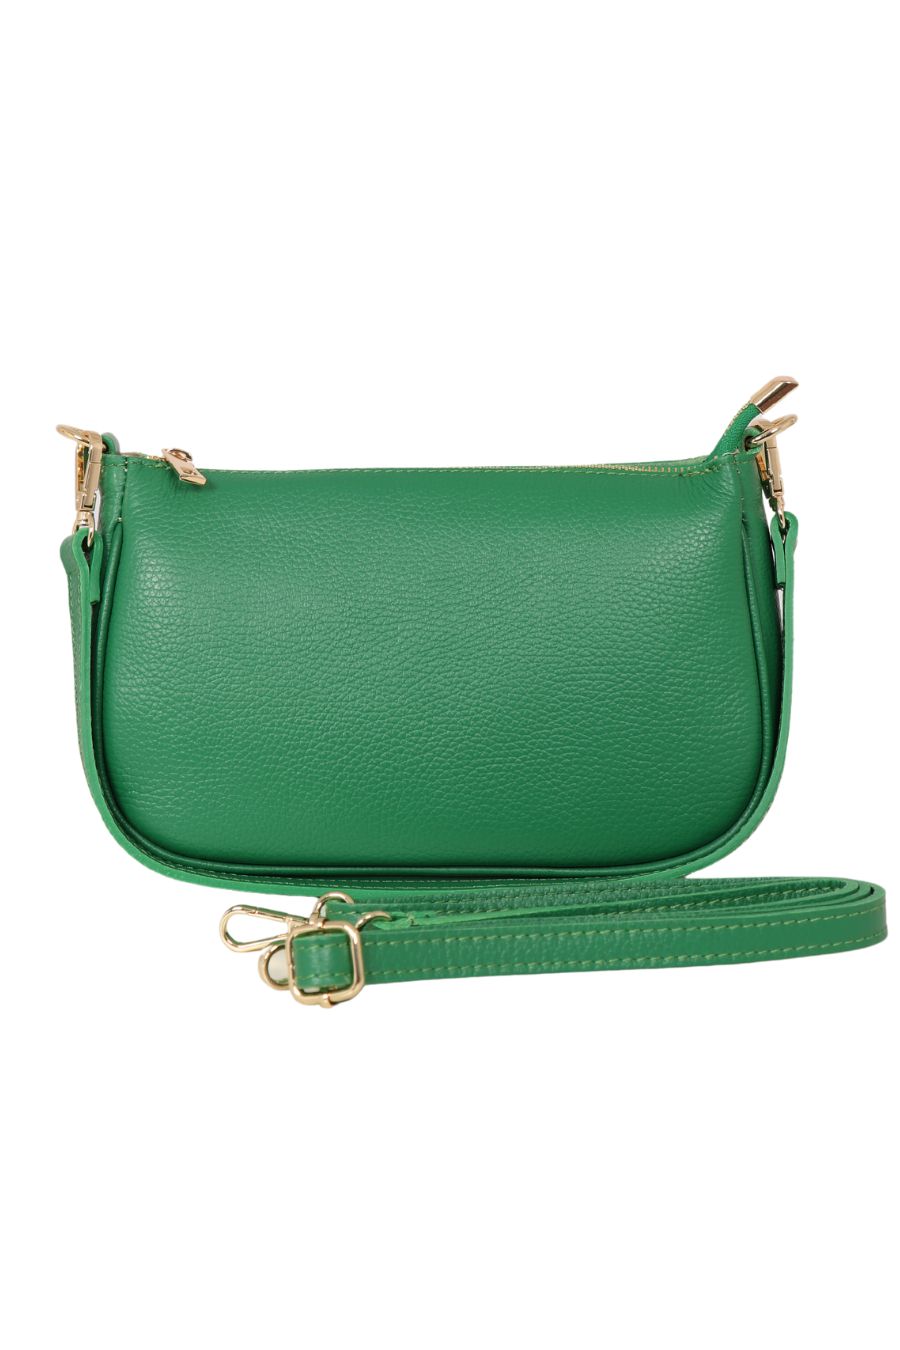 Bright Green Genuine Italian Leather Baguette Bag